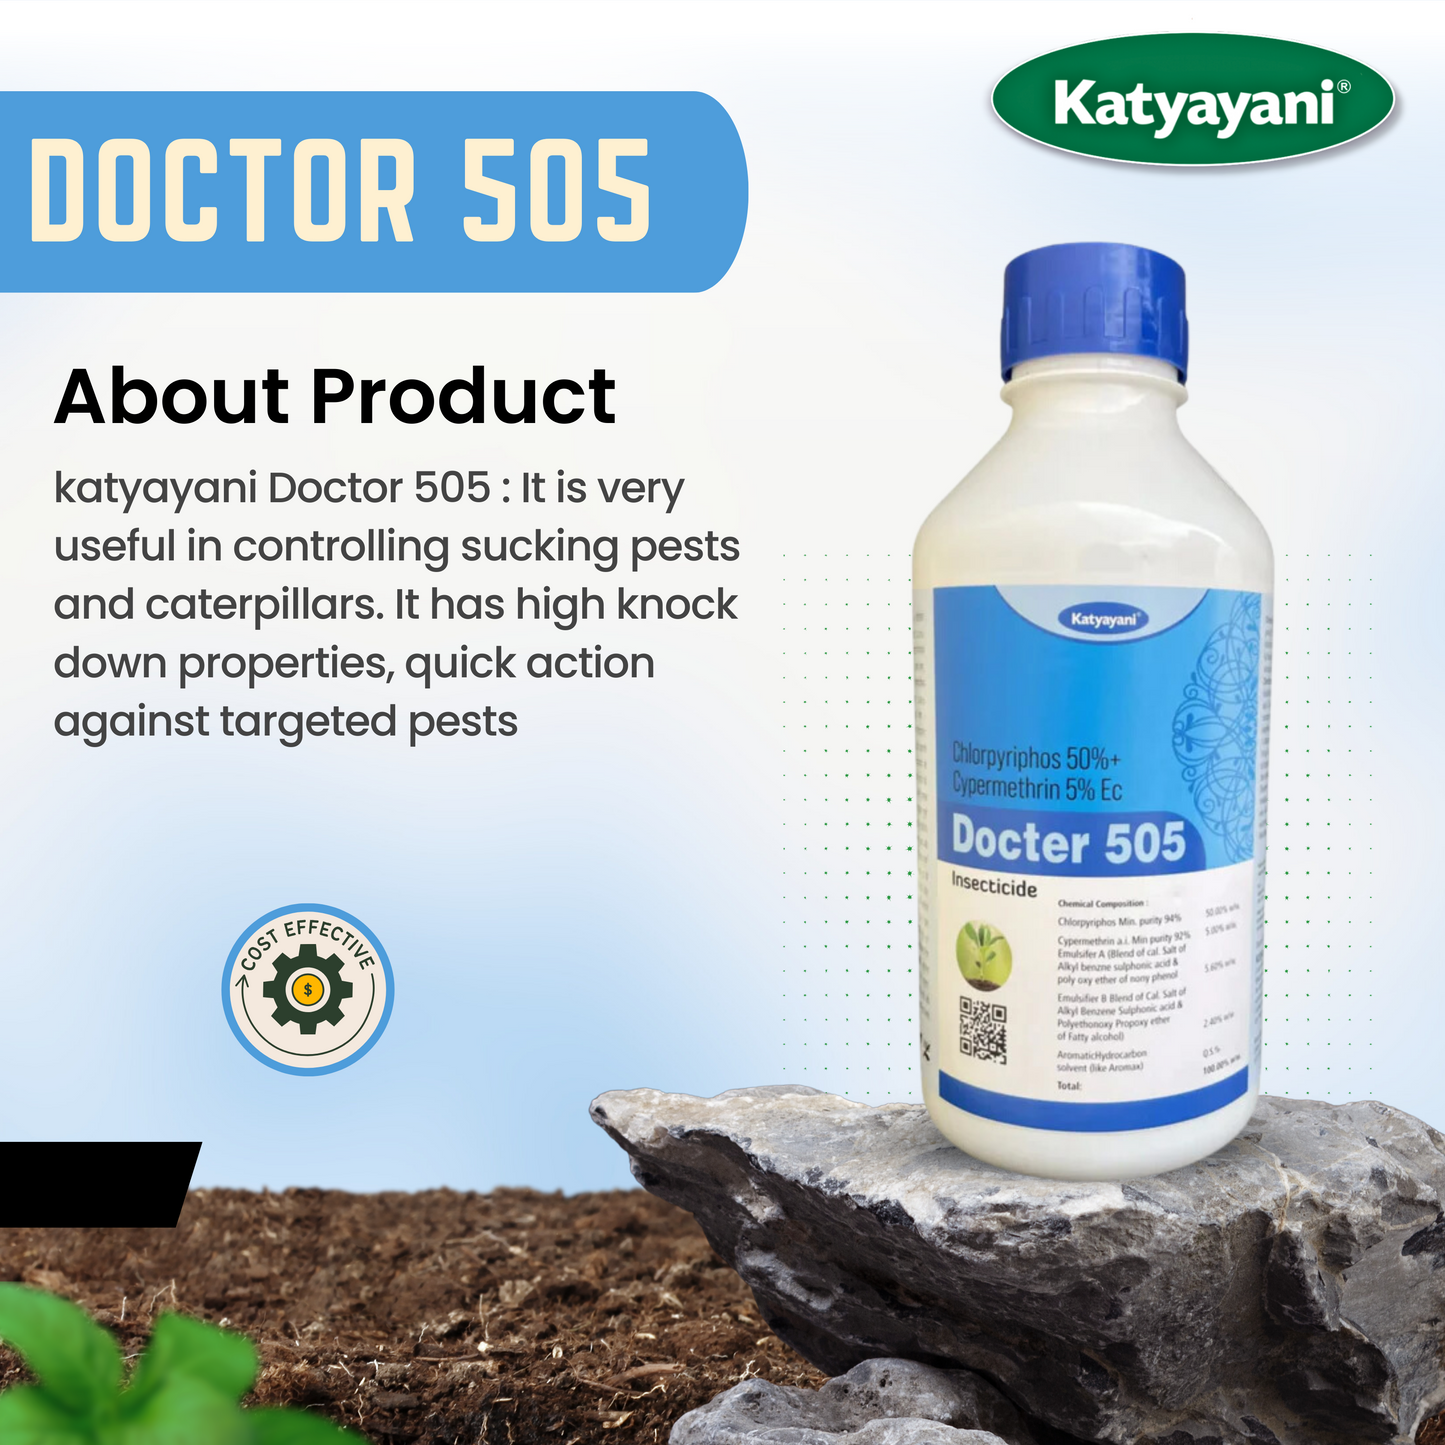 katyayani Chloropyriphos 50 % + cypermethrin 5 % EC - Docter 505 Insecticide product